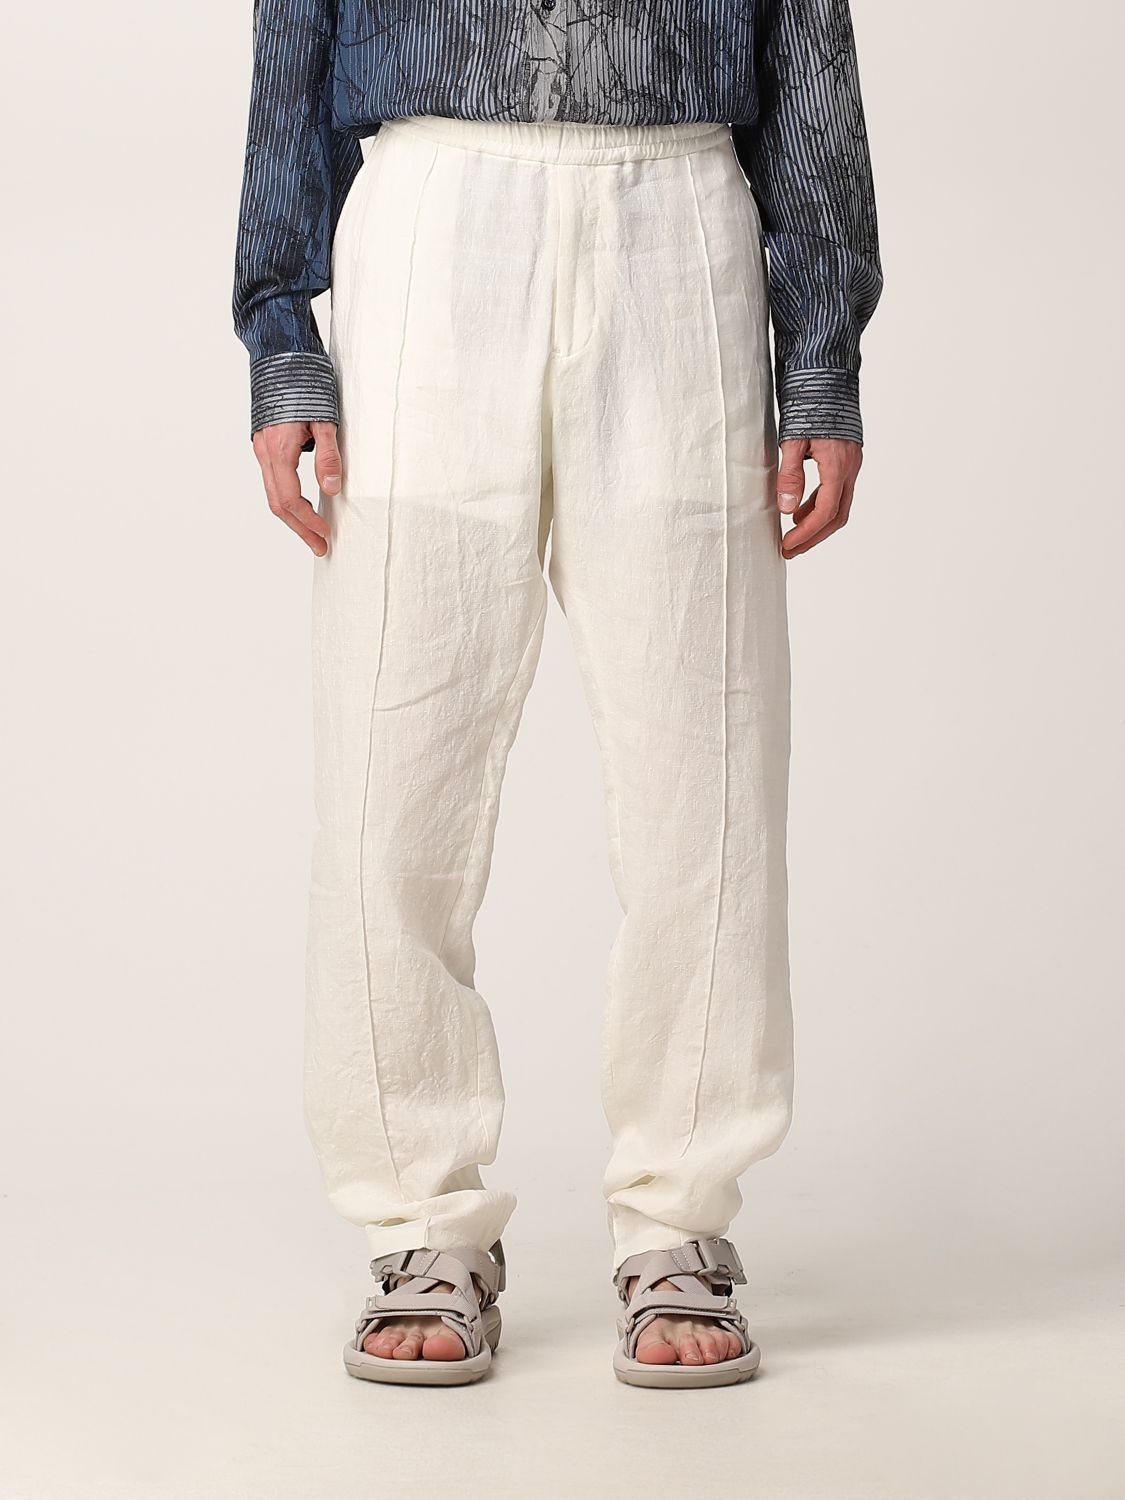 fysiek gas Vorm van het schip EMPORIO ARMANI: pants in linen with pleats - White | Emporio Armani pants  I1P890I1448 online on GIGLIO.COM